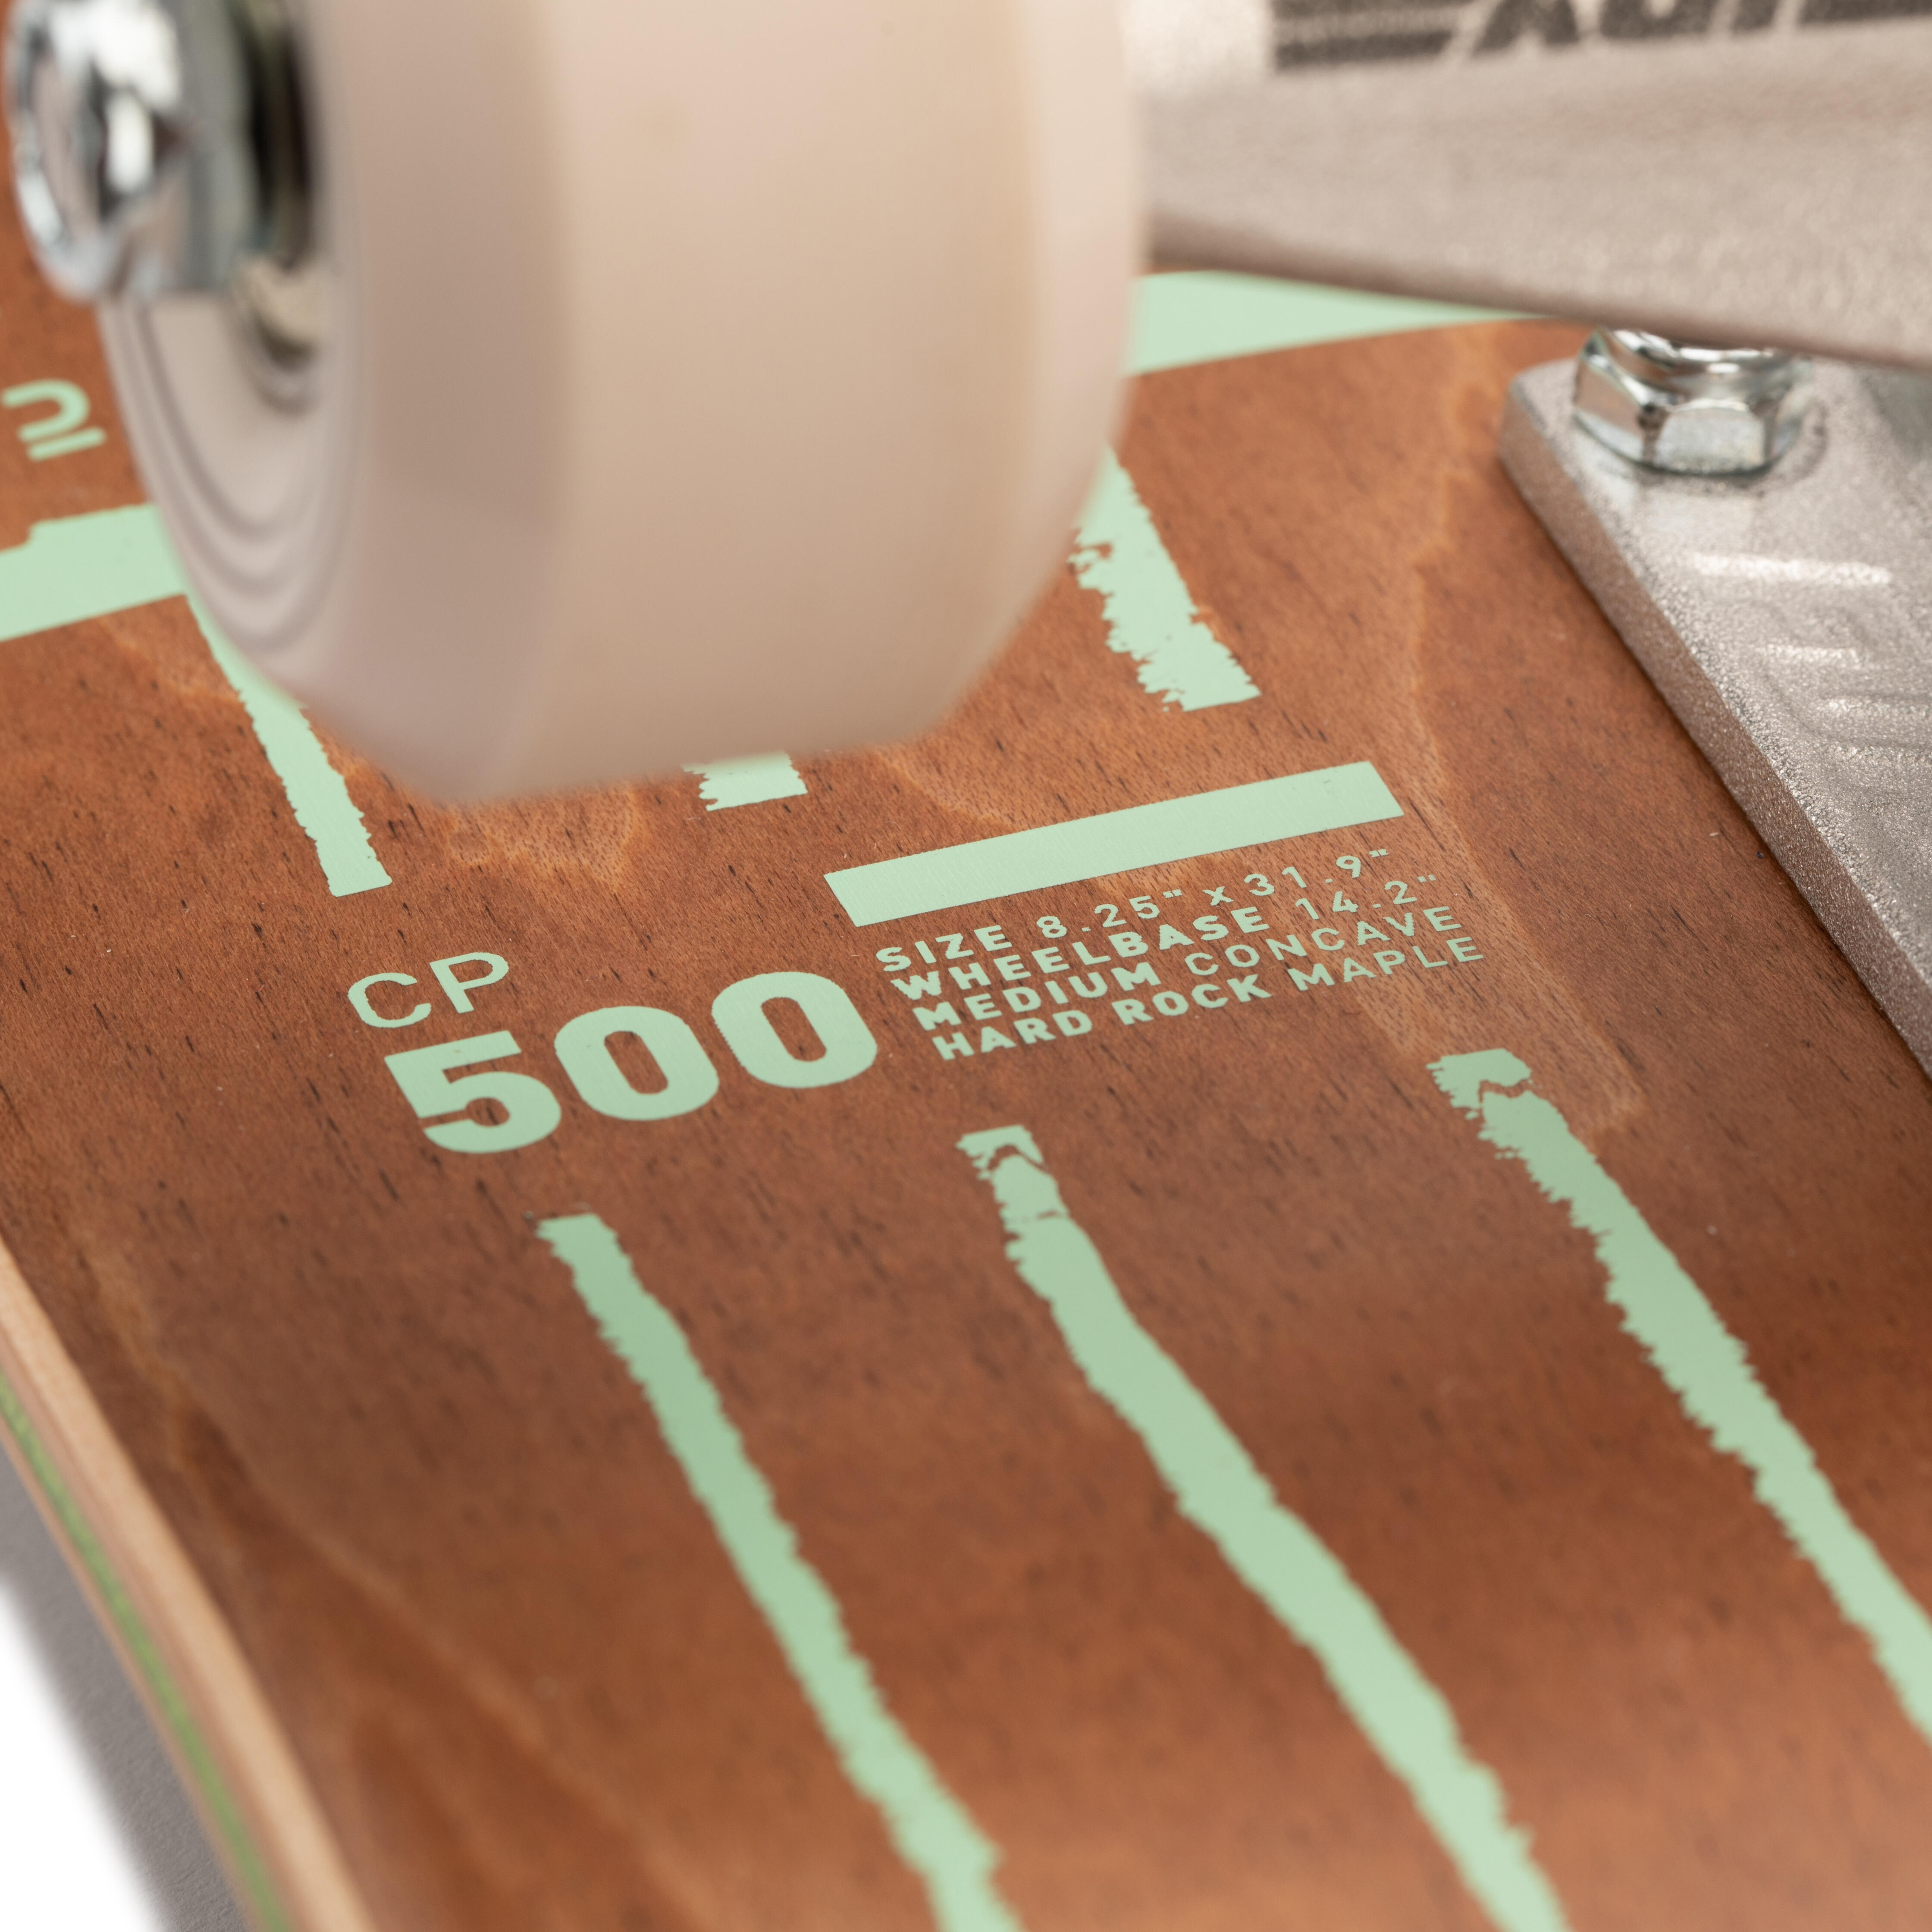 CP 500 skateboard - OXELO